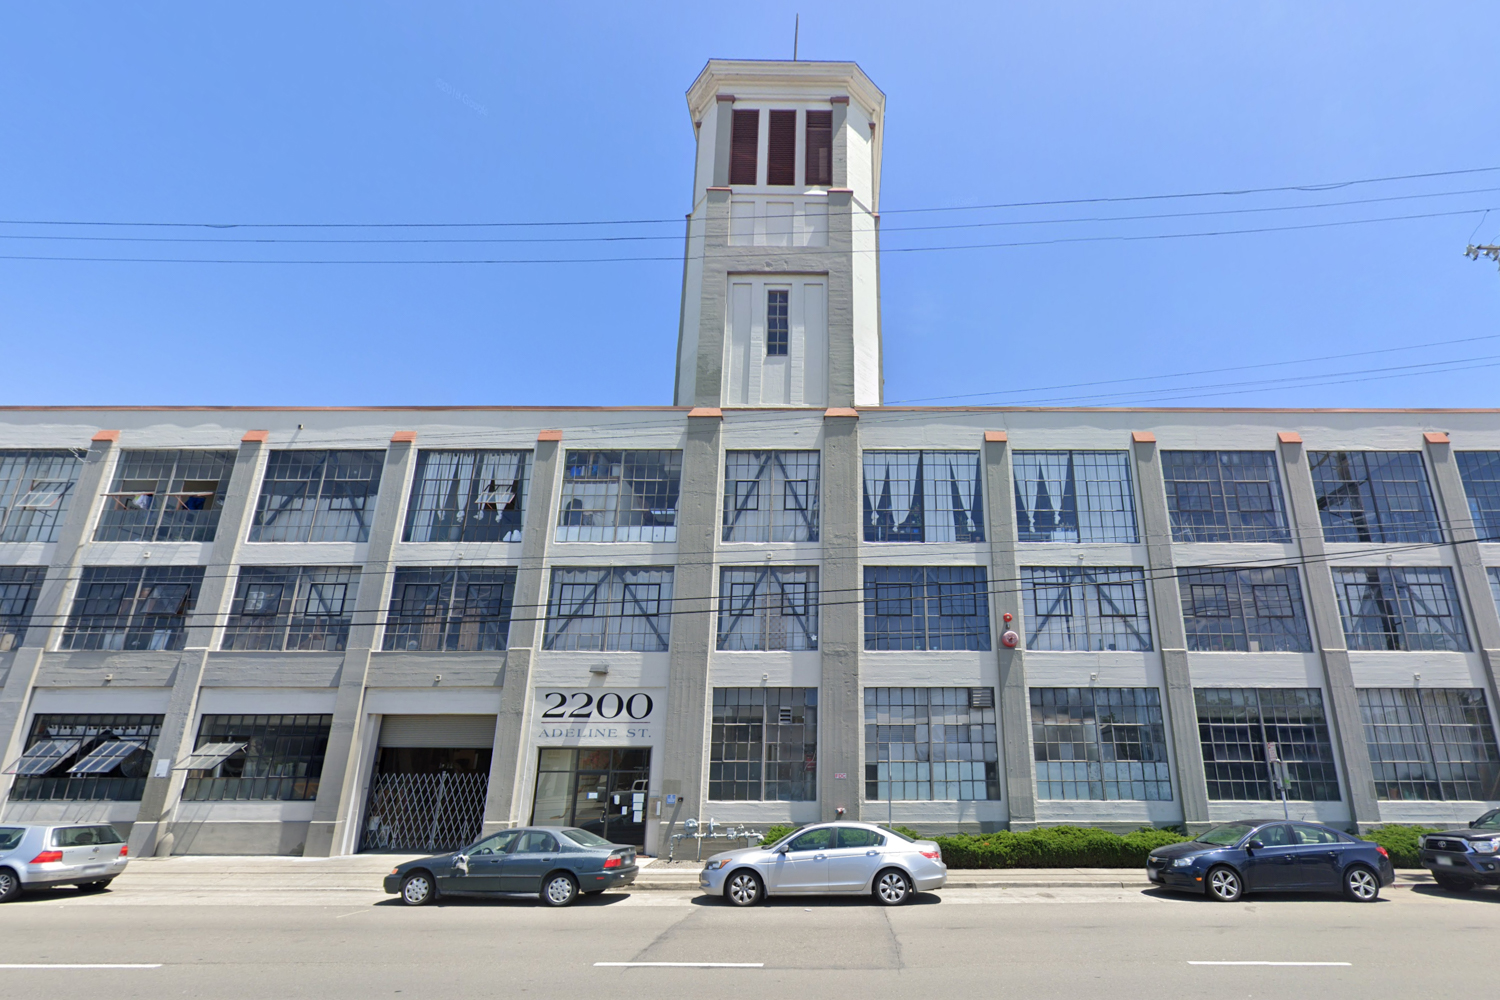 2200 Adeline Street tower, image via Google Street View